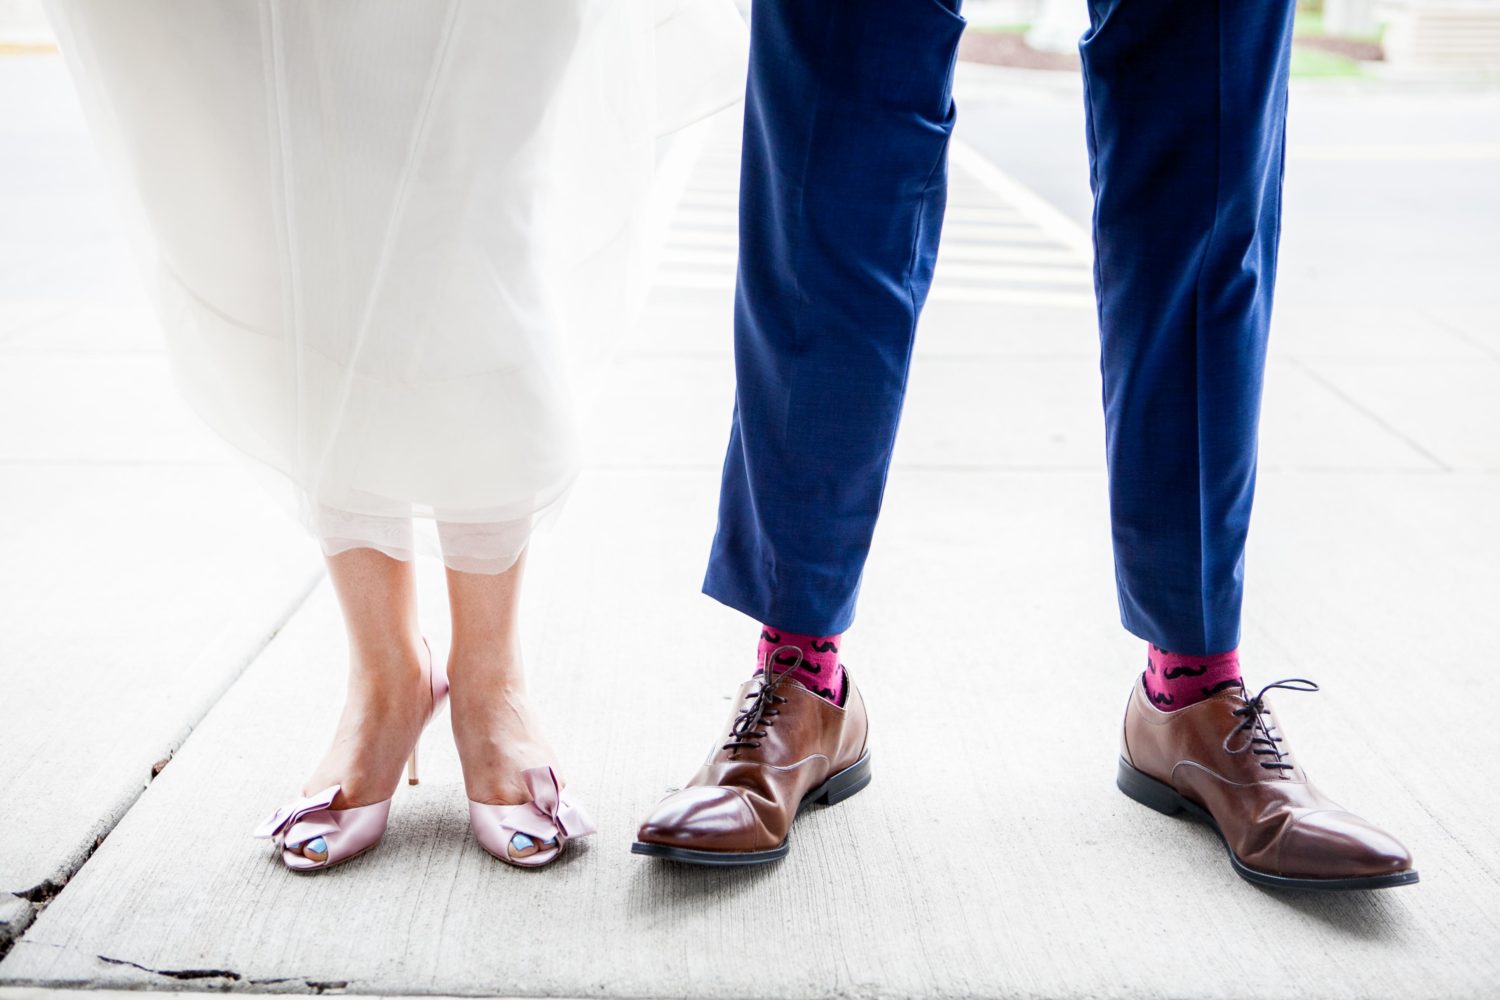 Chic feet - kc wedding planning